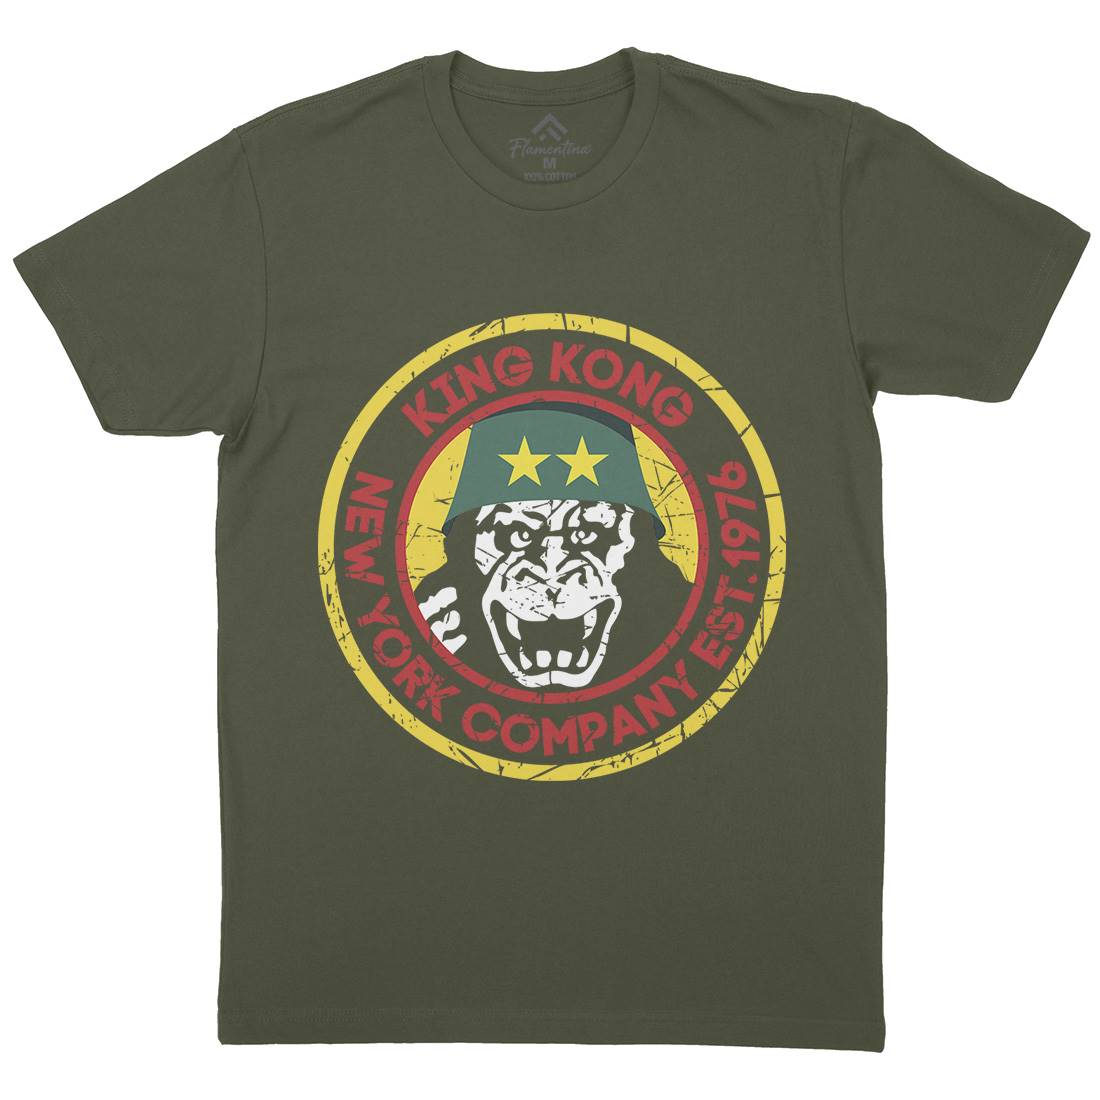 King Kong Company Mens Crew Neck T-Shirt Retro D362